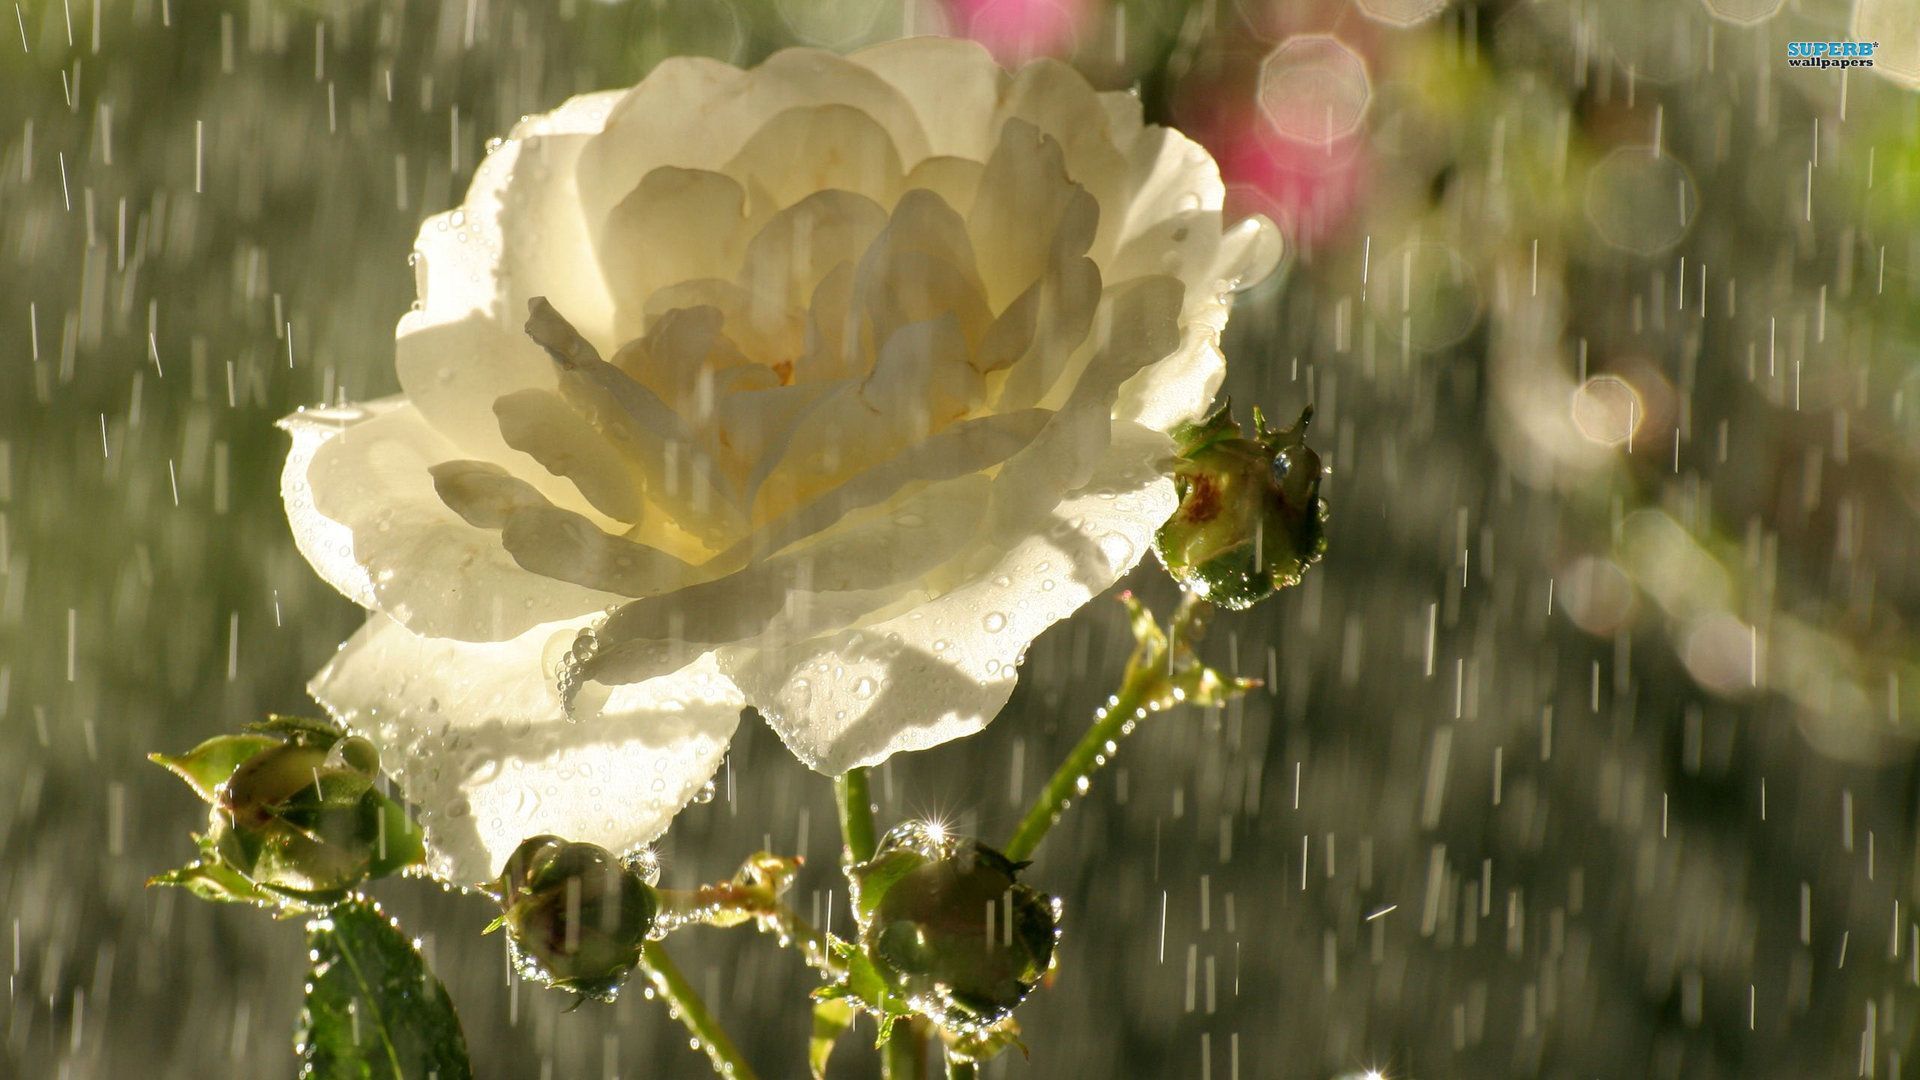 Rose in rain wallpaper - Flower wallpapers - #4265